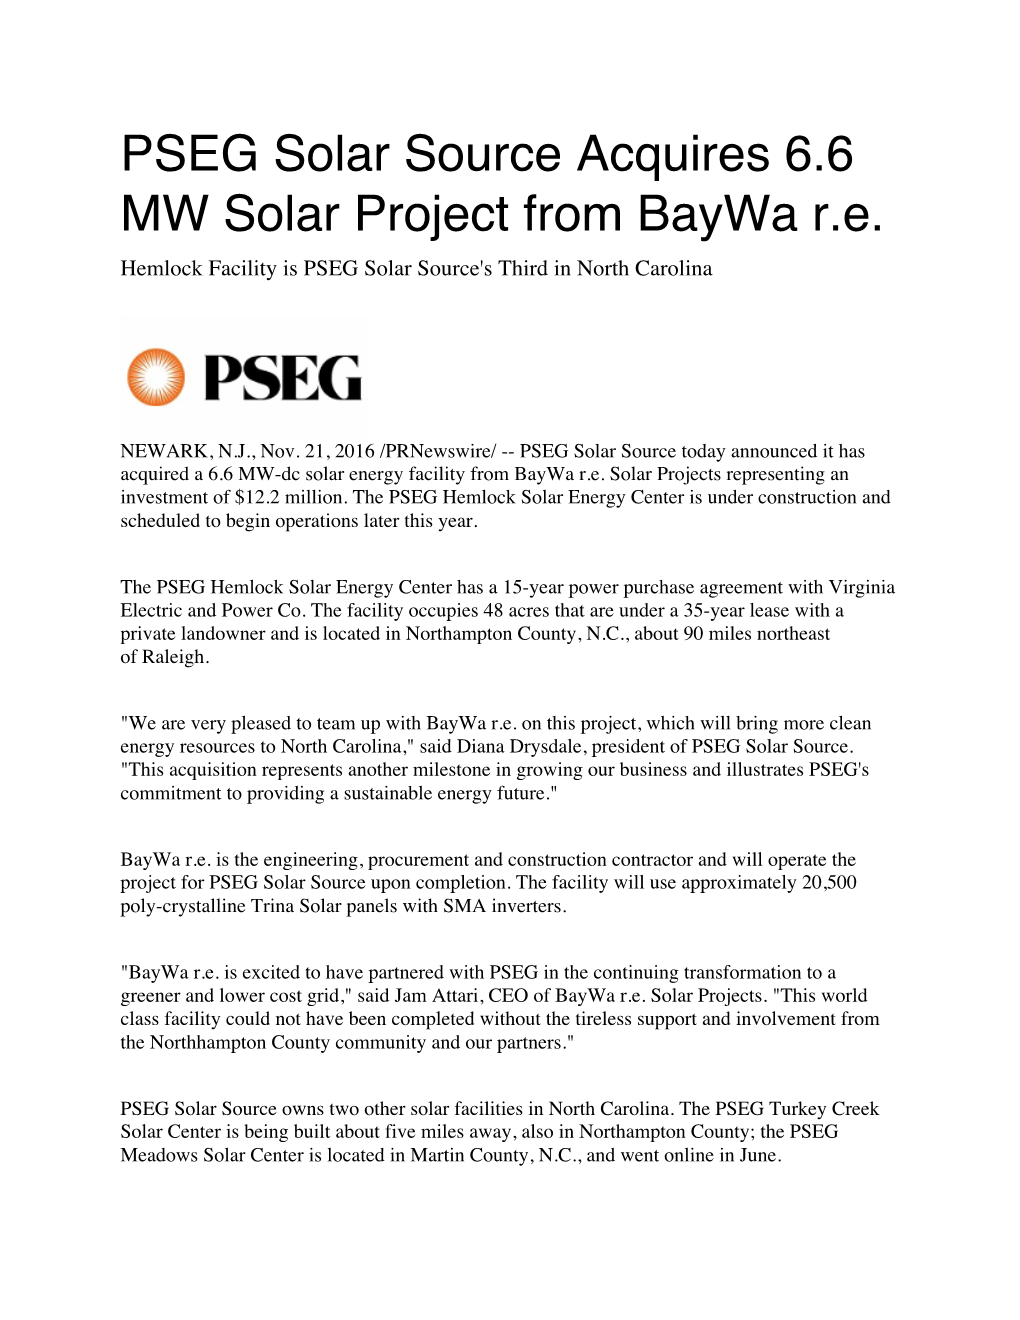 PSEG Solar Source Acquires 6.6 MW Solar Project from Baywa R.E. Hemlock Facility Is PSEG Solar Source's Third in North Carolina